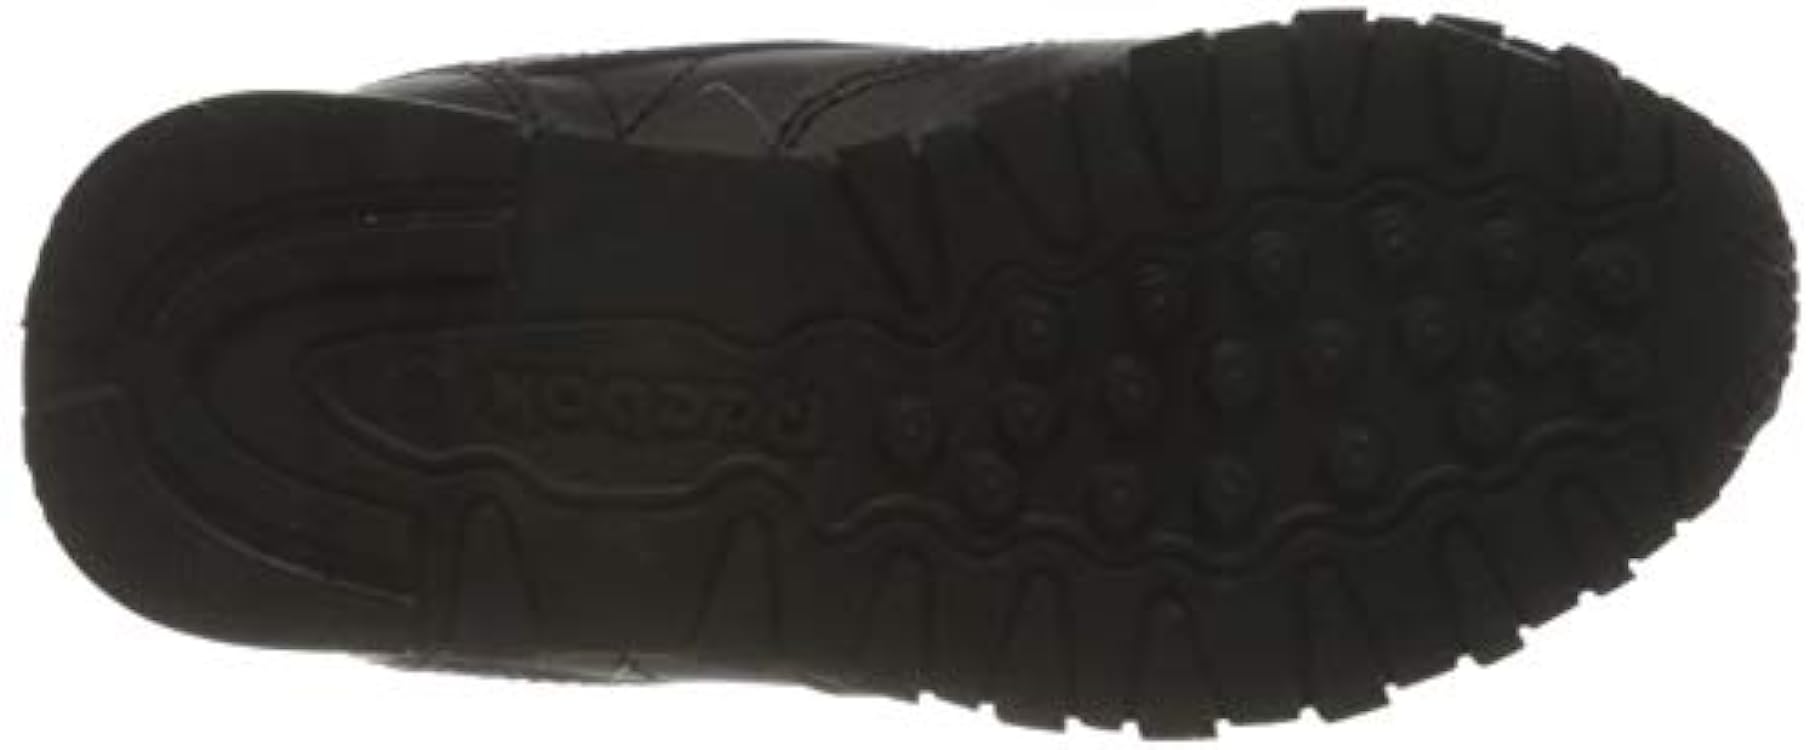 Reebok Classic Leather, Scarpe da ginnastica Unisex - Bimbi 0-24, Nero, 23.5 EU 902193201